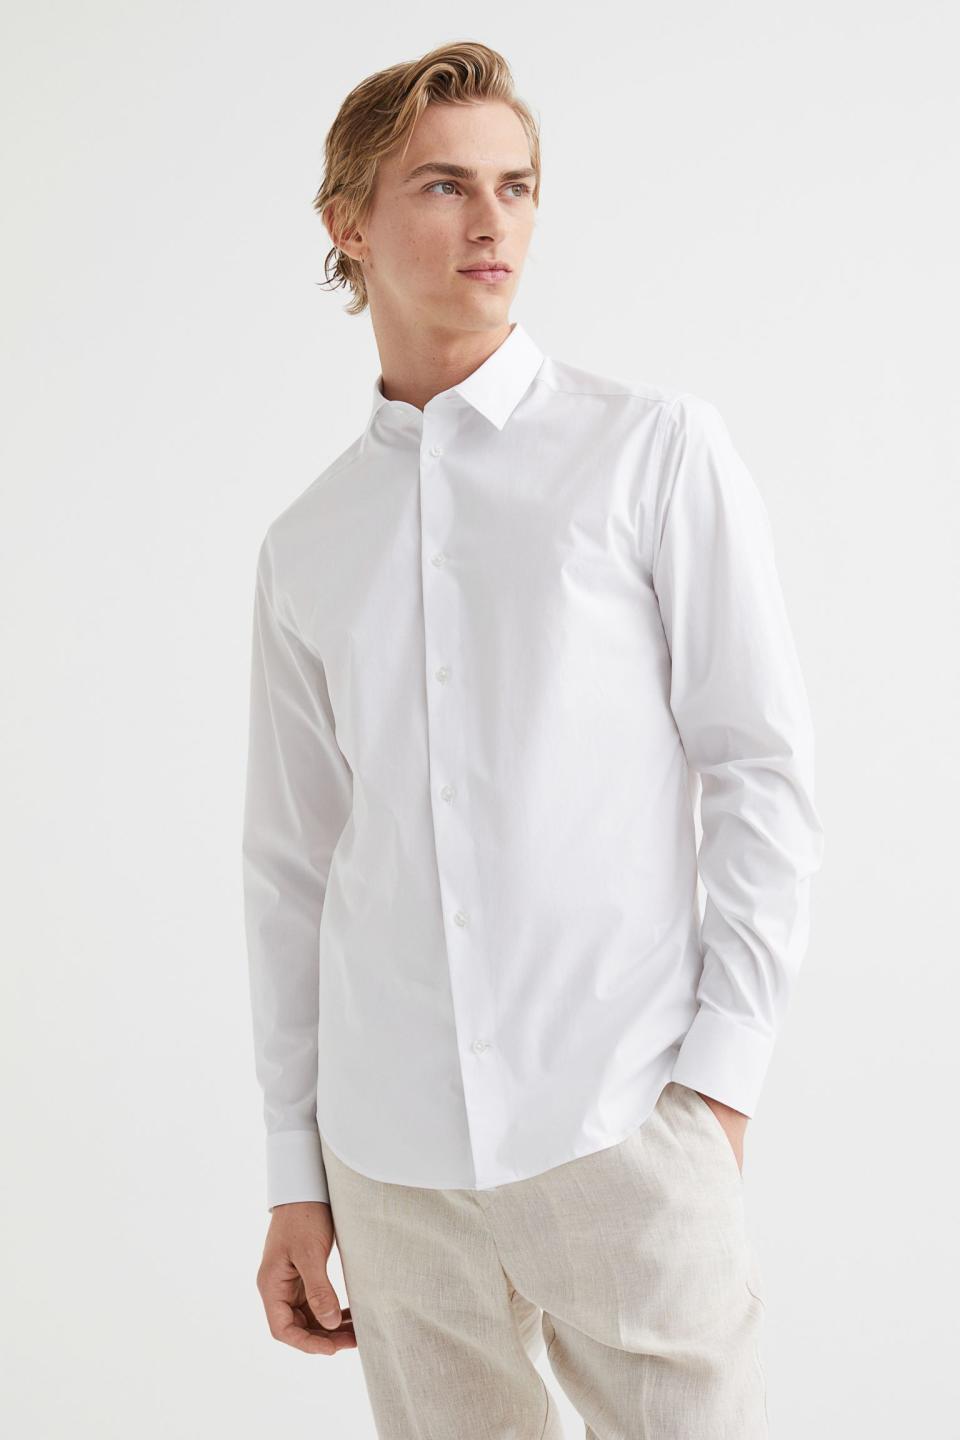 best white dress shirt, H&M slim fit stretch shirt